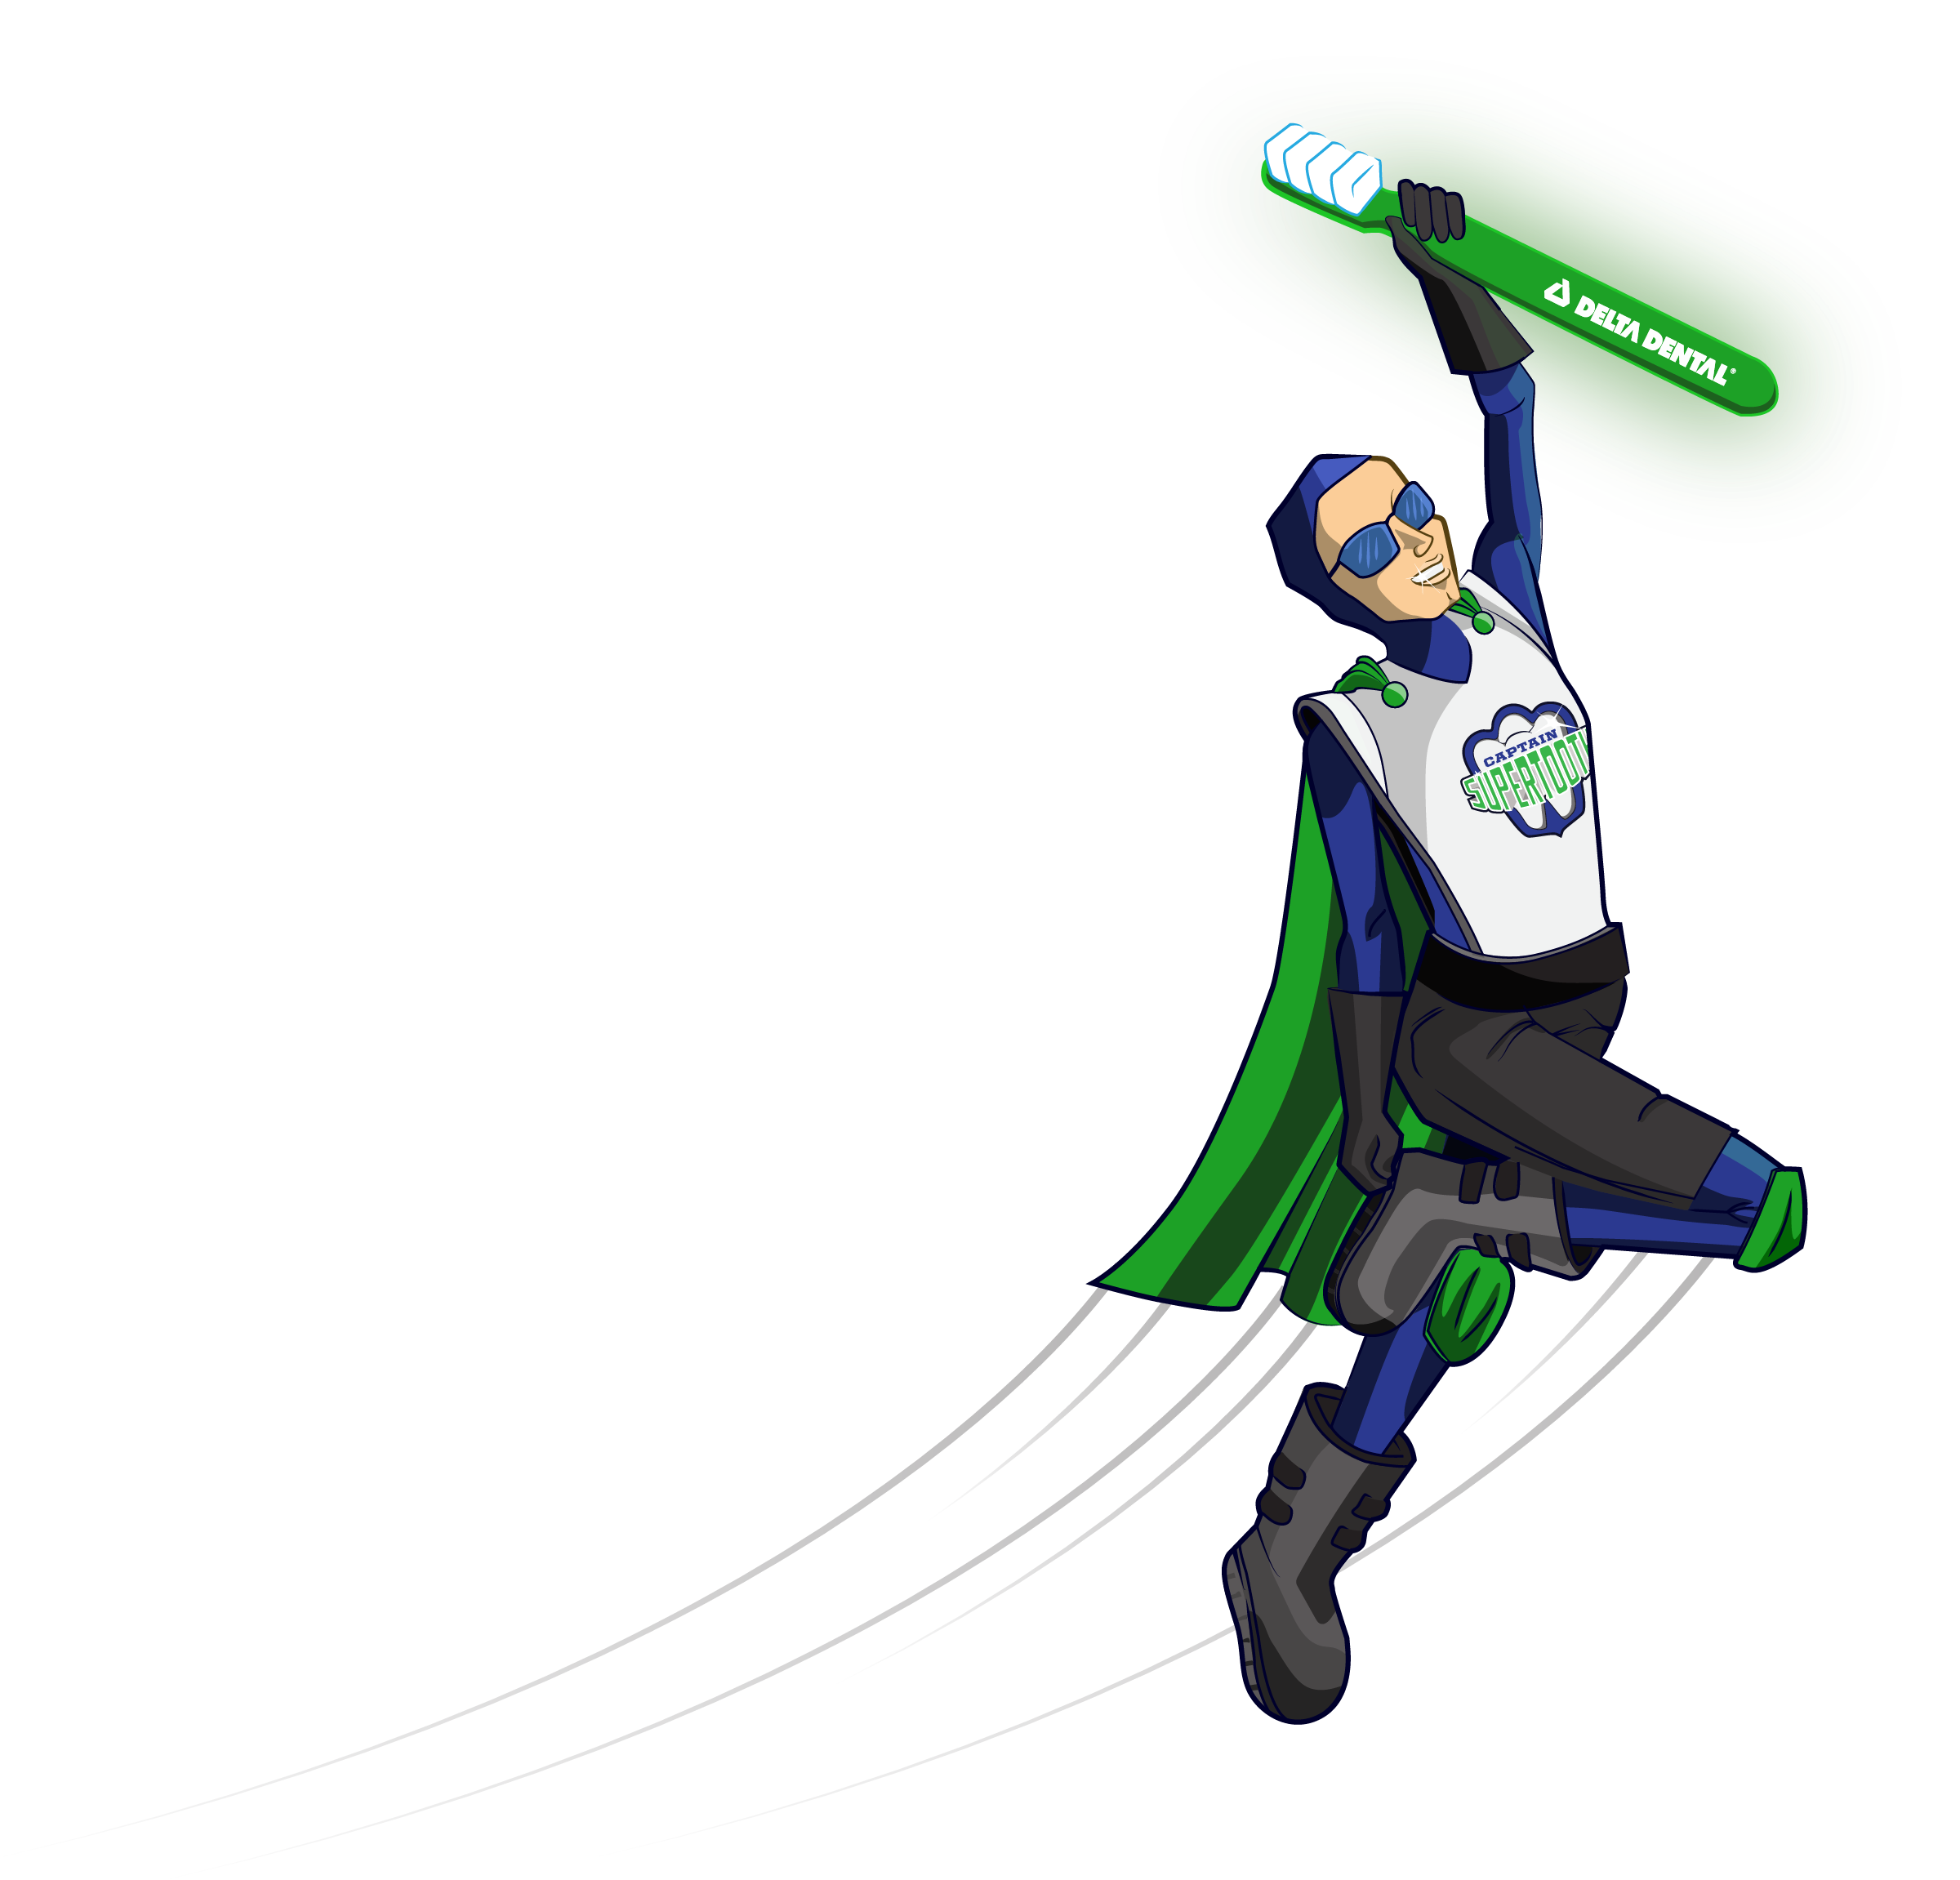 Captain Supertooth cartoon character flying